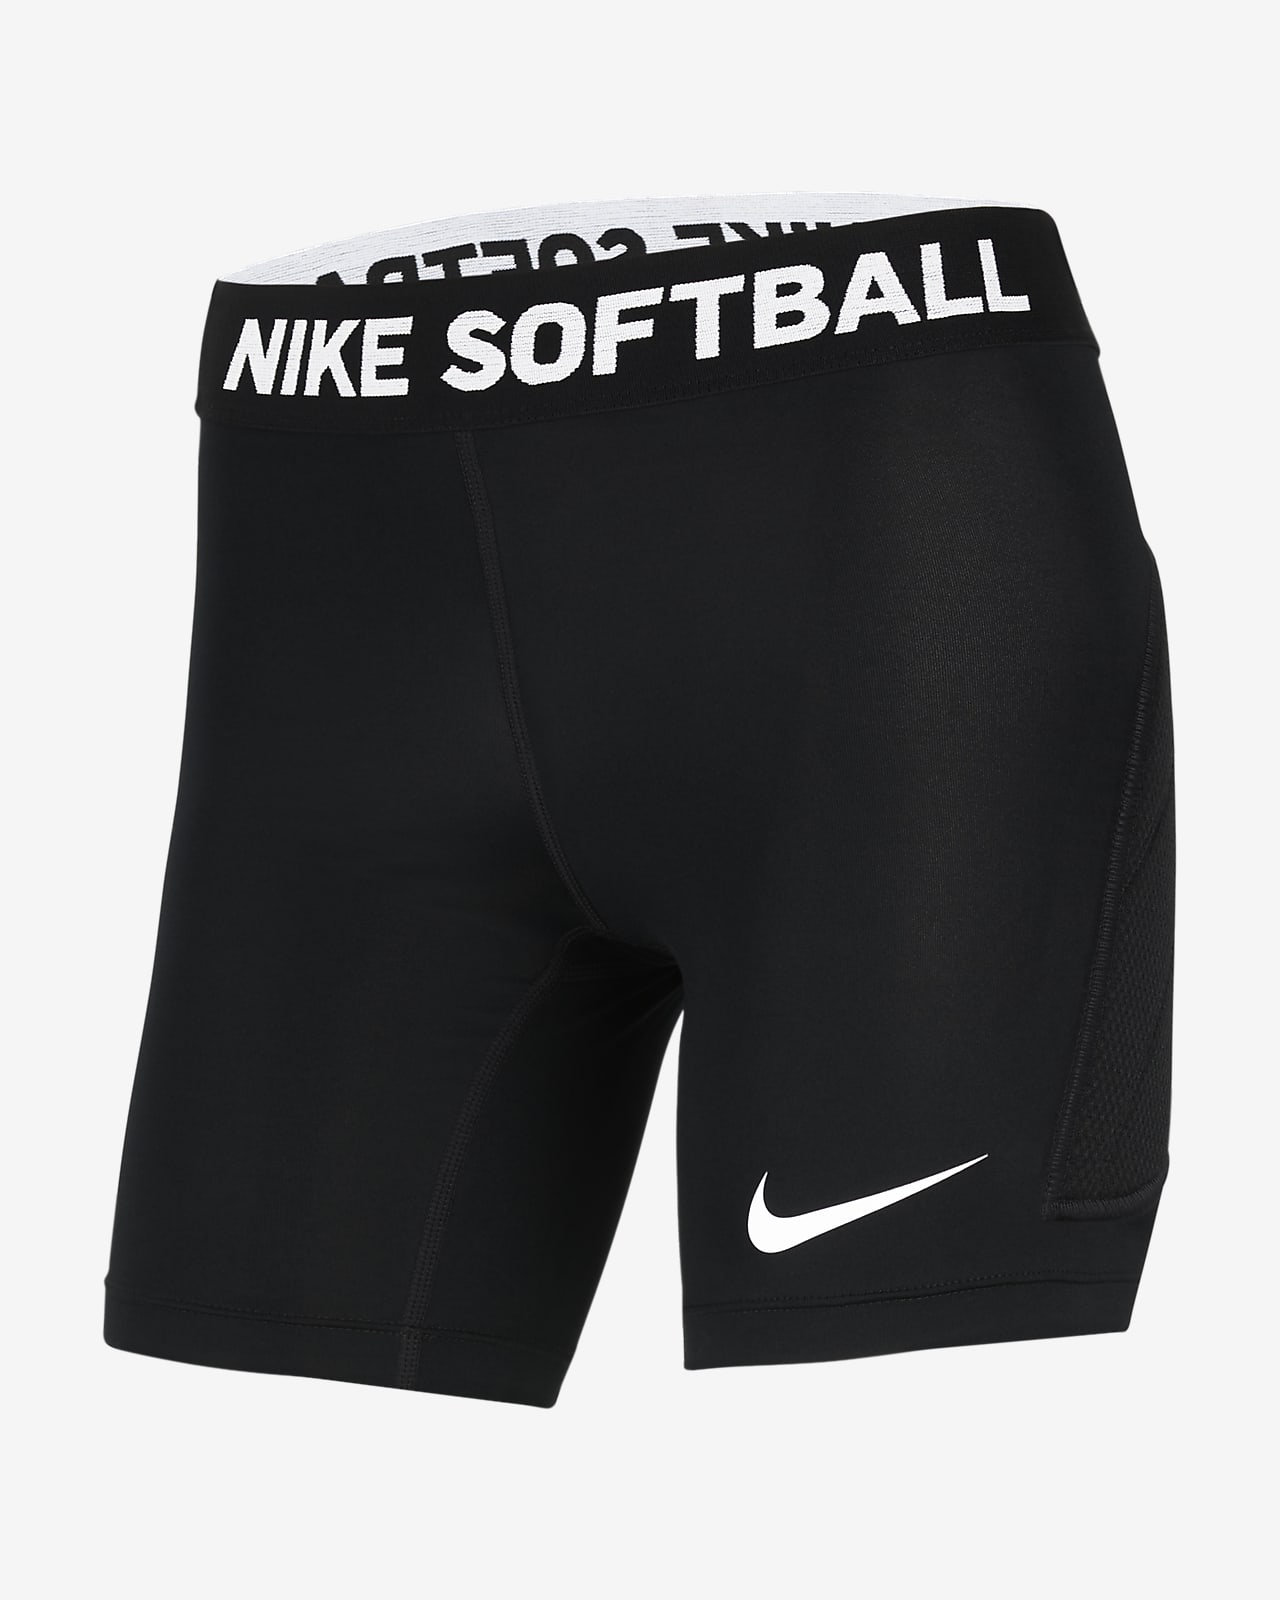 nike softball sliding shorts